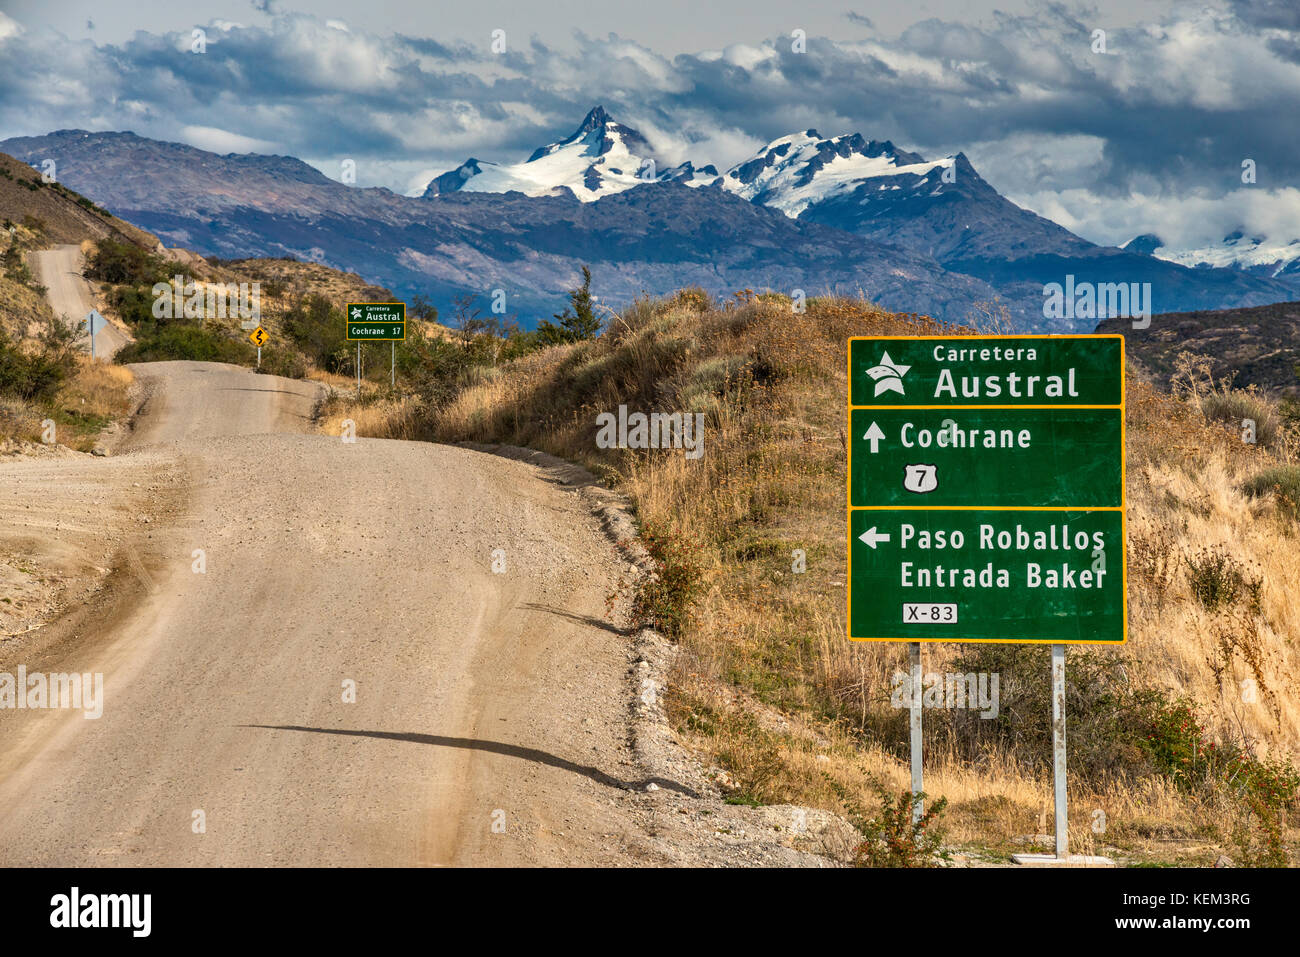 Carretera Austral in Chacabuco Valley area, future Patagonia National Park, near Cochrane, Chile Stock Photo